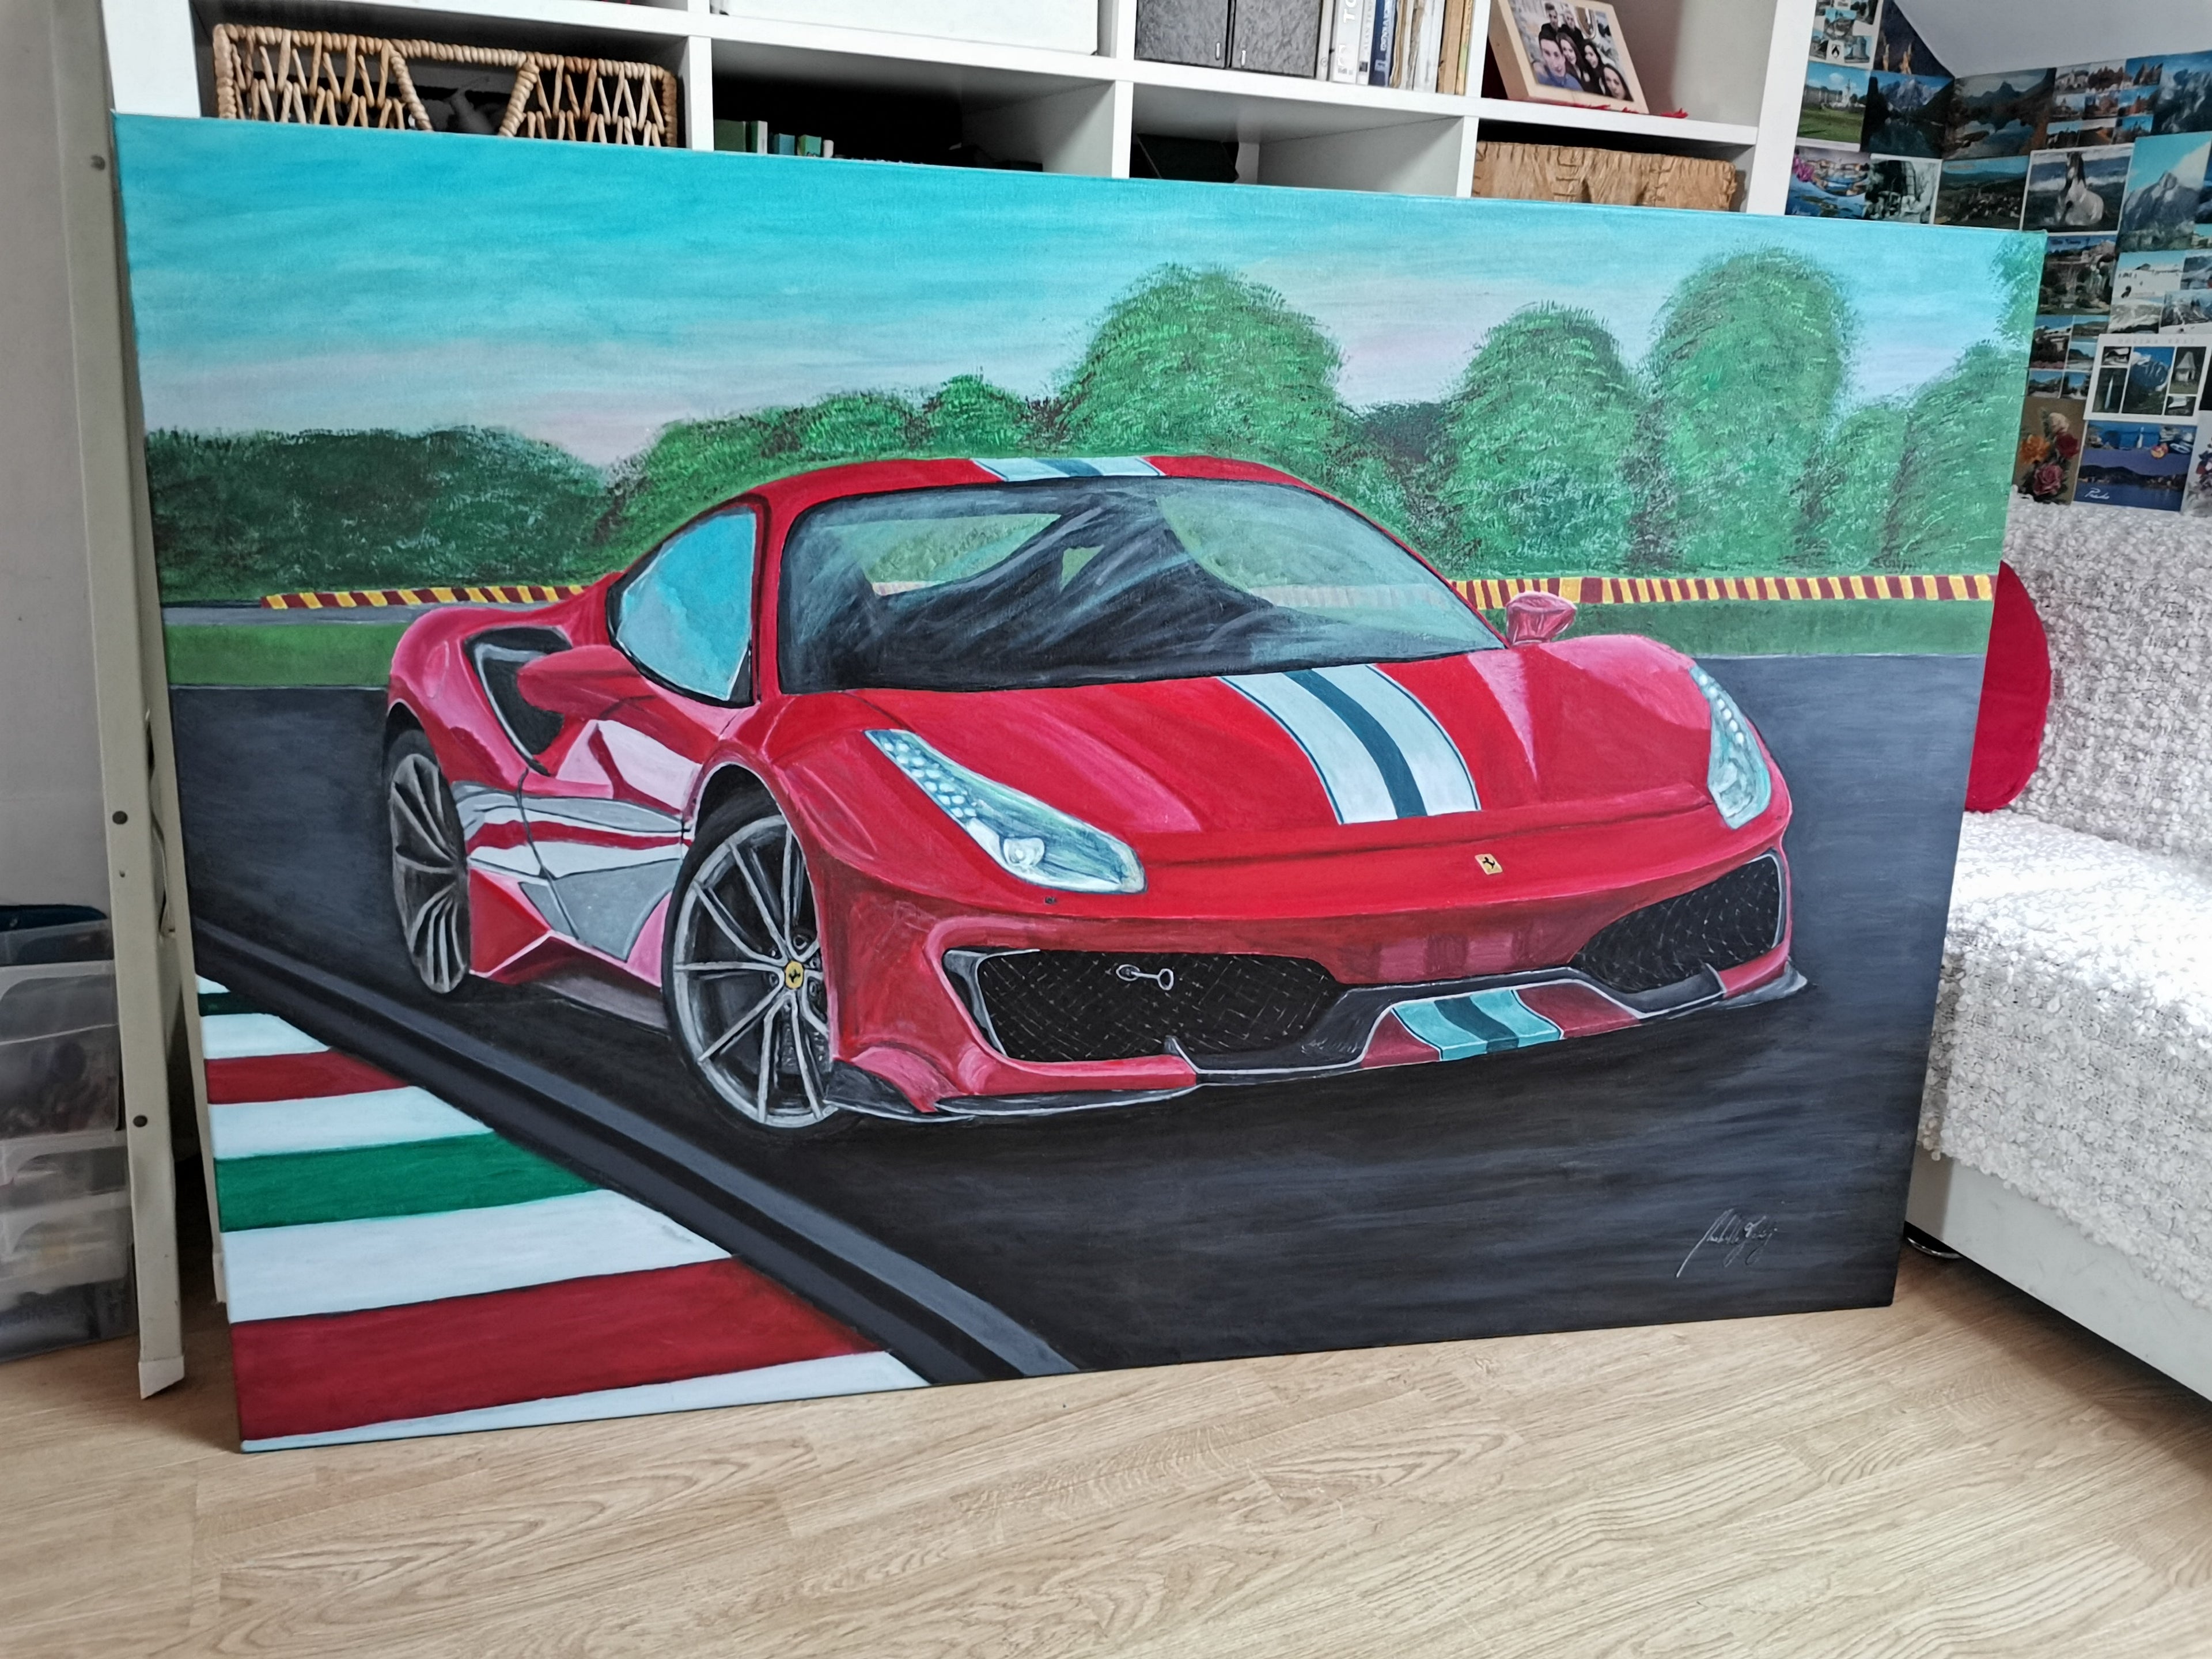 Ferrari Pista Original Acrylic Painting on Canvas